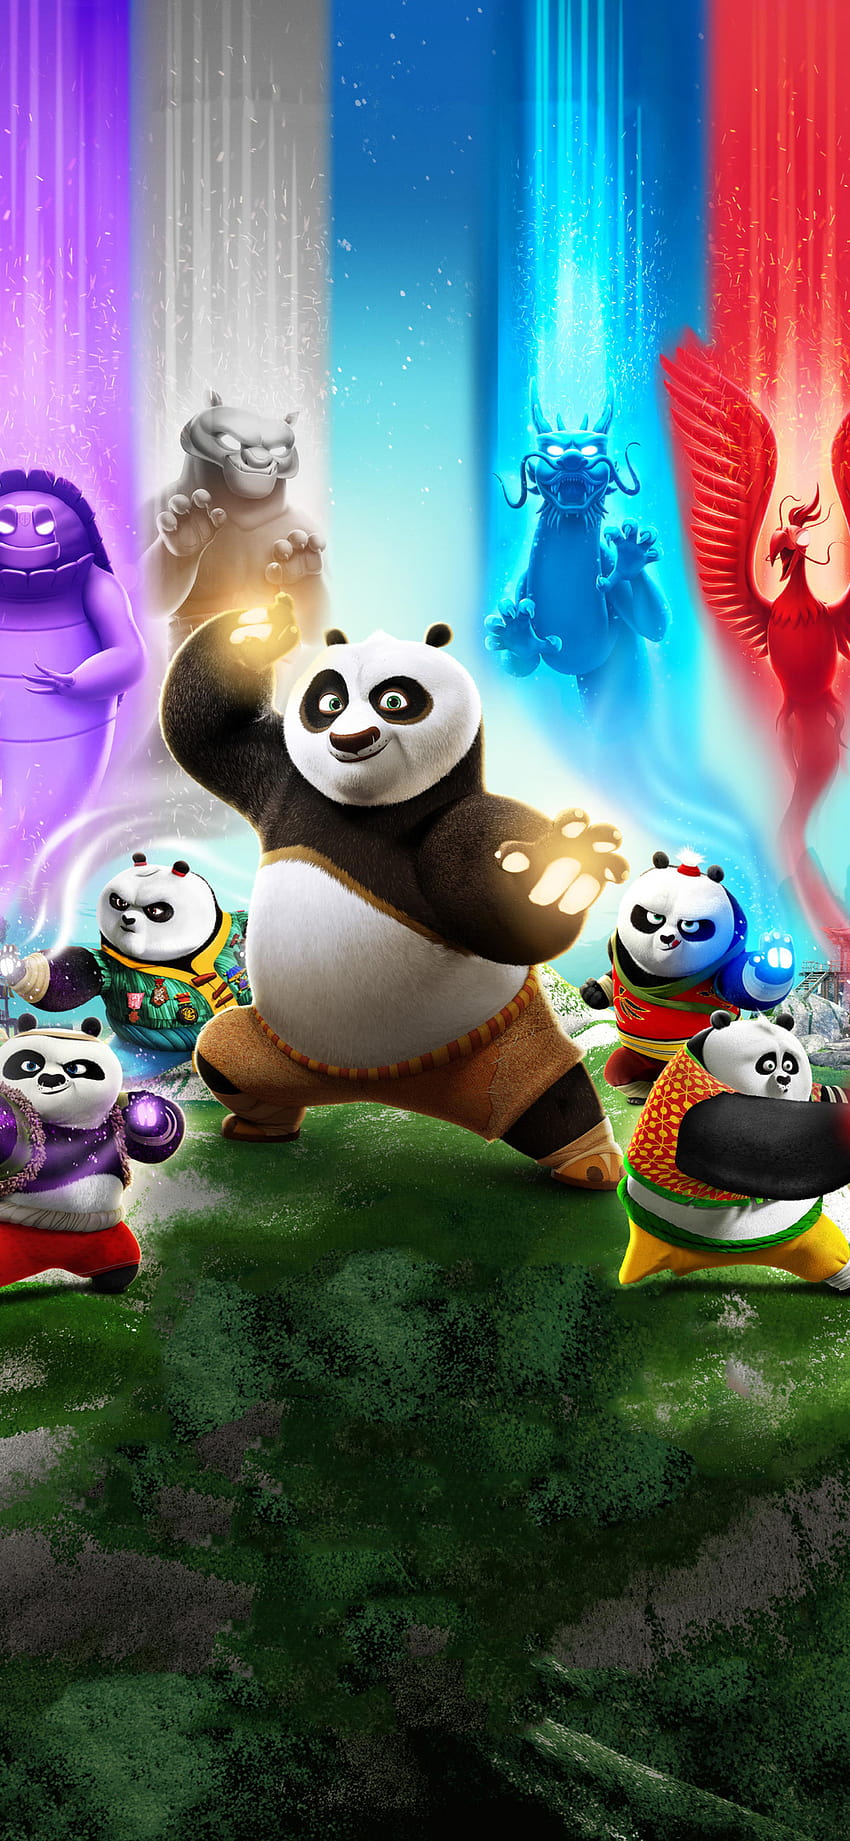 1125x2436 Kung Fu Panda As Patas do Destino 2018 Iphone XS, Iphone 10, Iphone X , Planos de fundo e, kung fu panda mobile Papel de parede de celular HD